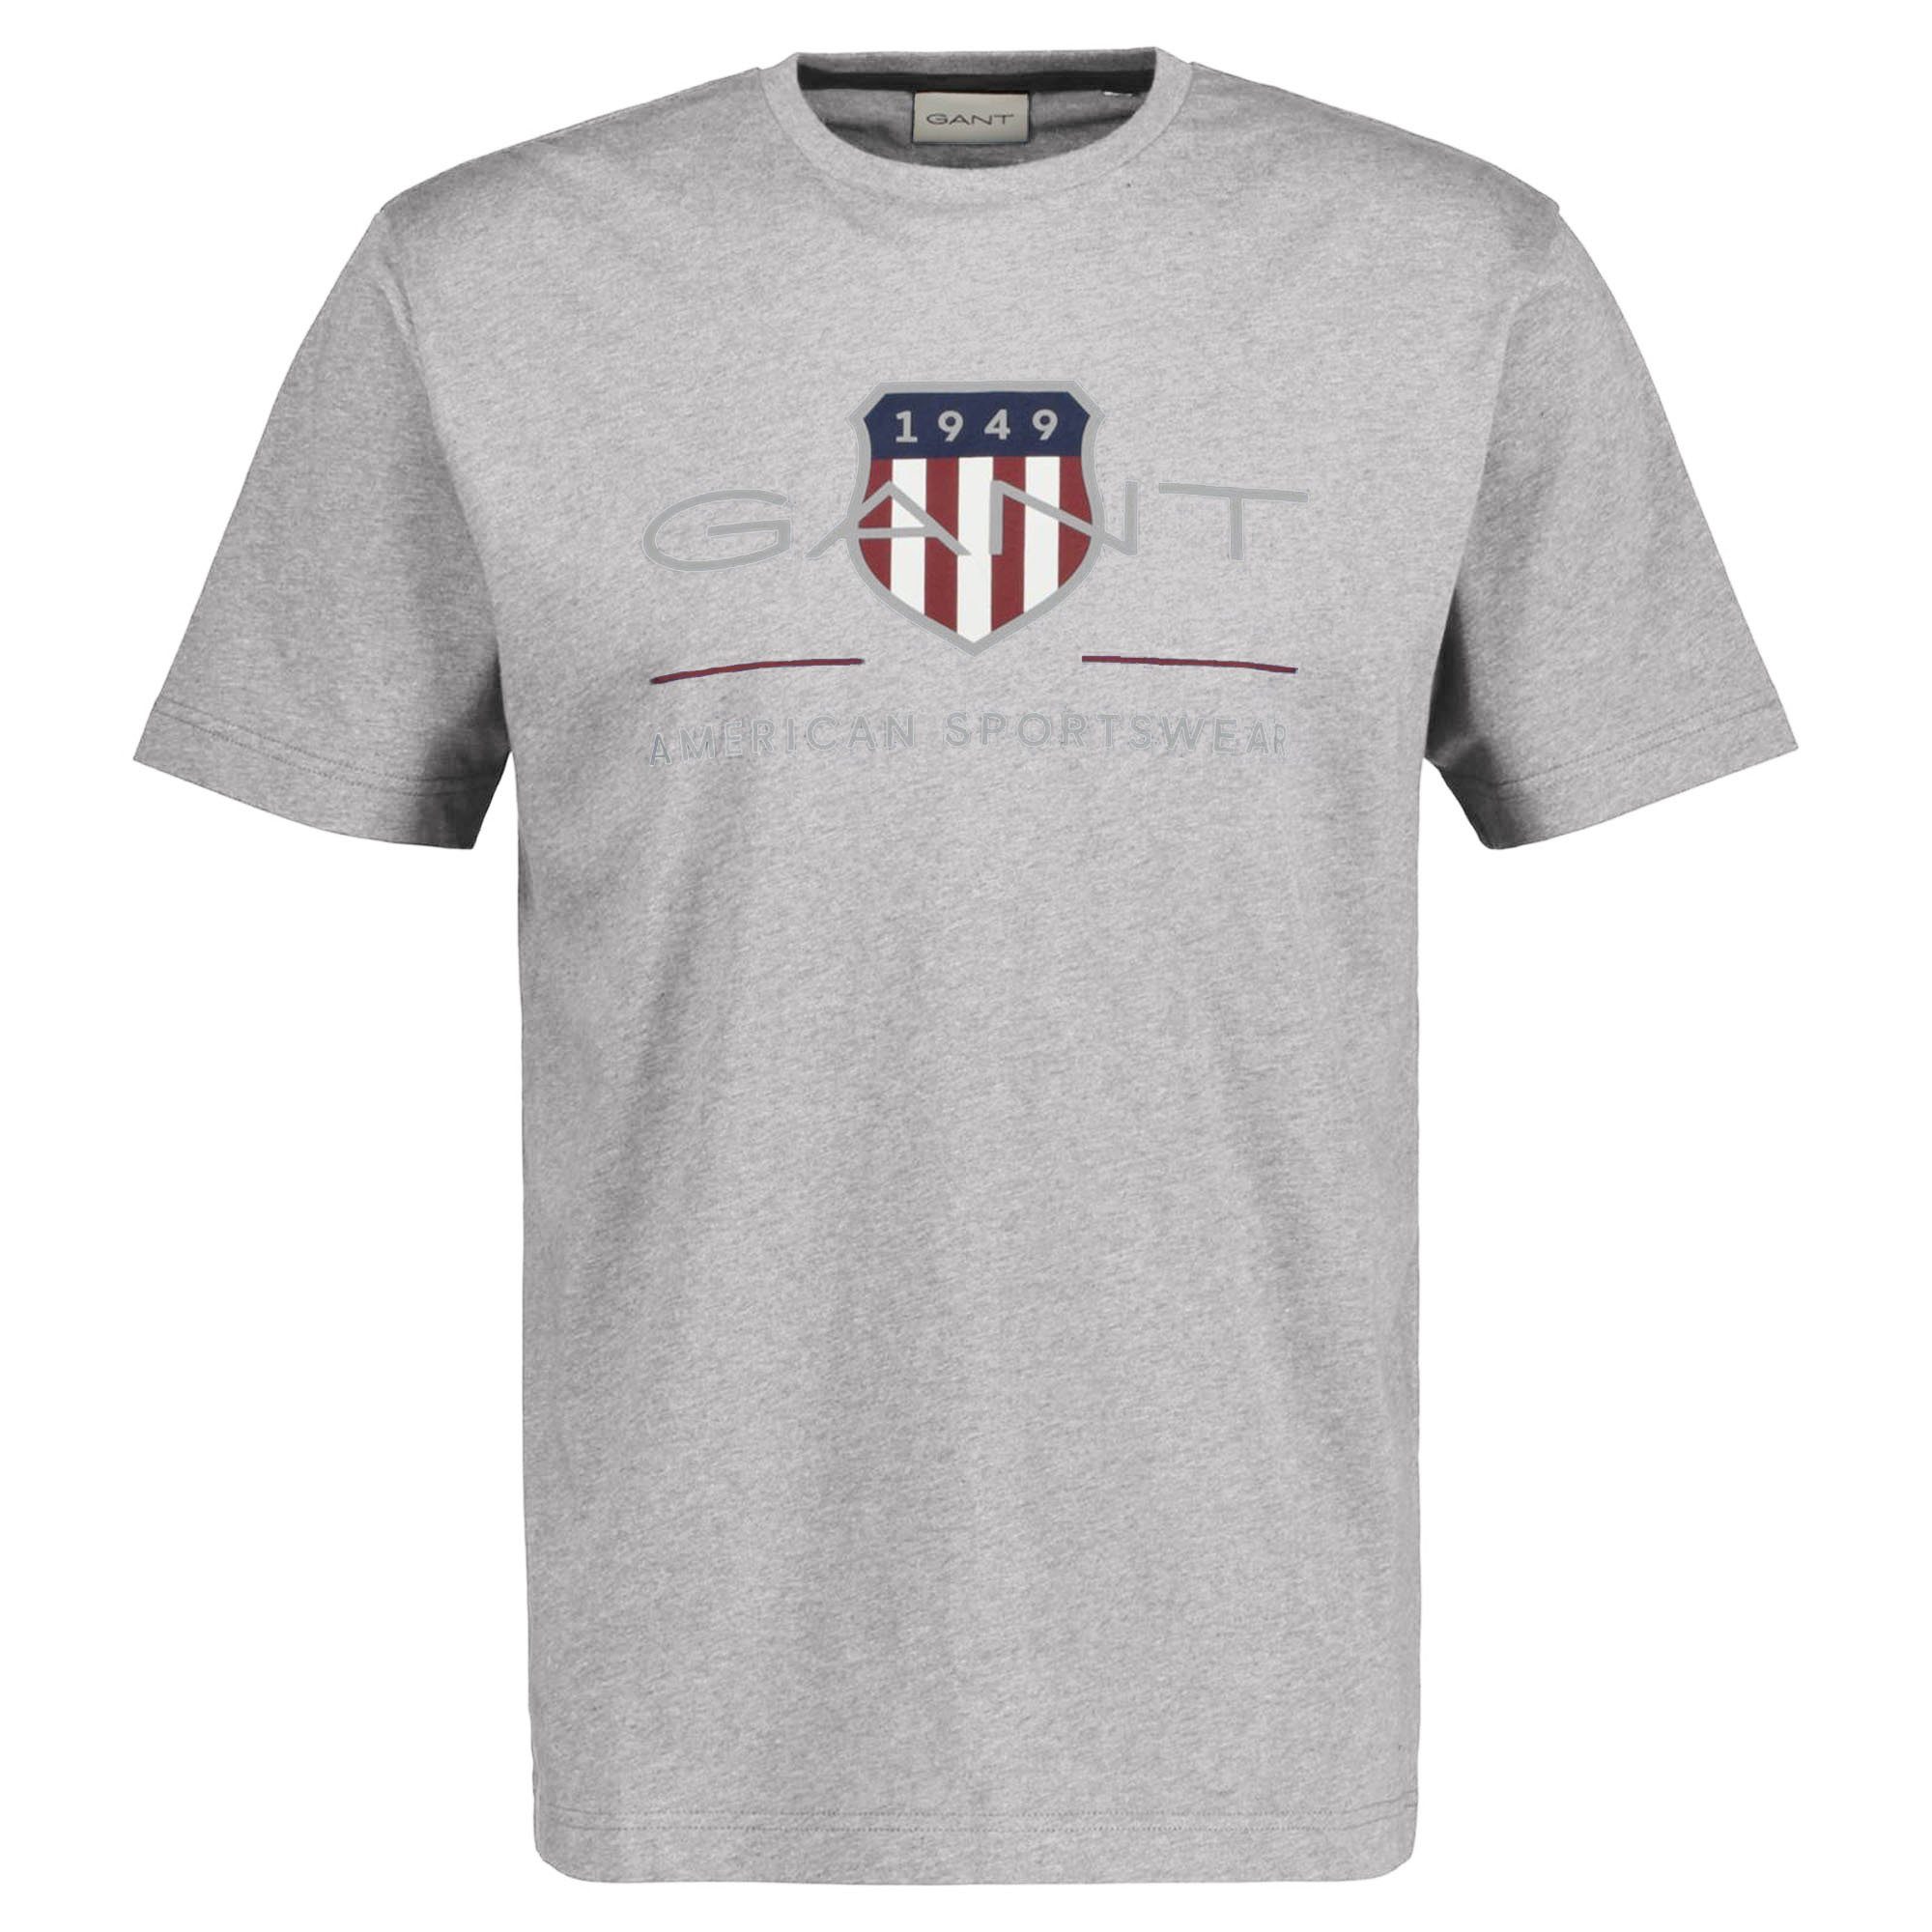 Gant T-Shirt Herren T-Shirt - REGULAR ARCHIVE SHIELD, Rundhals Grau